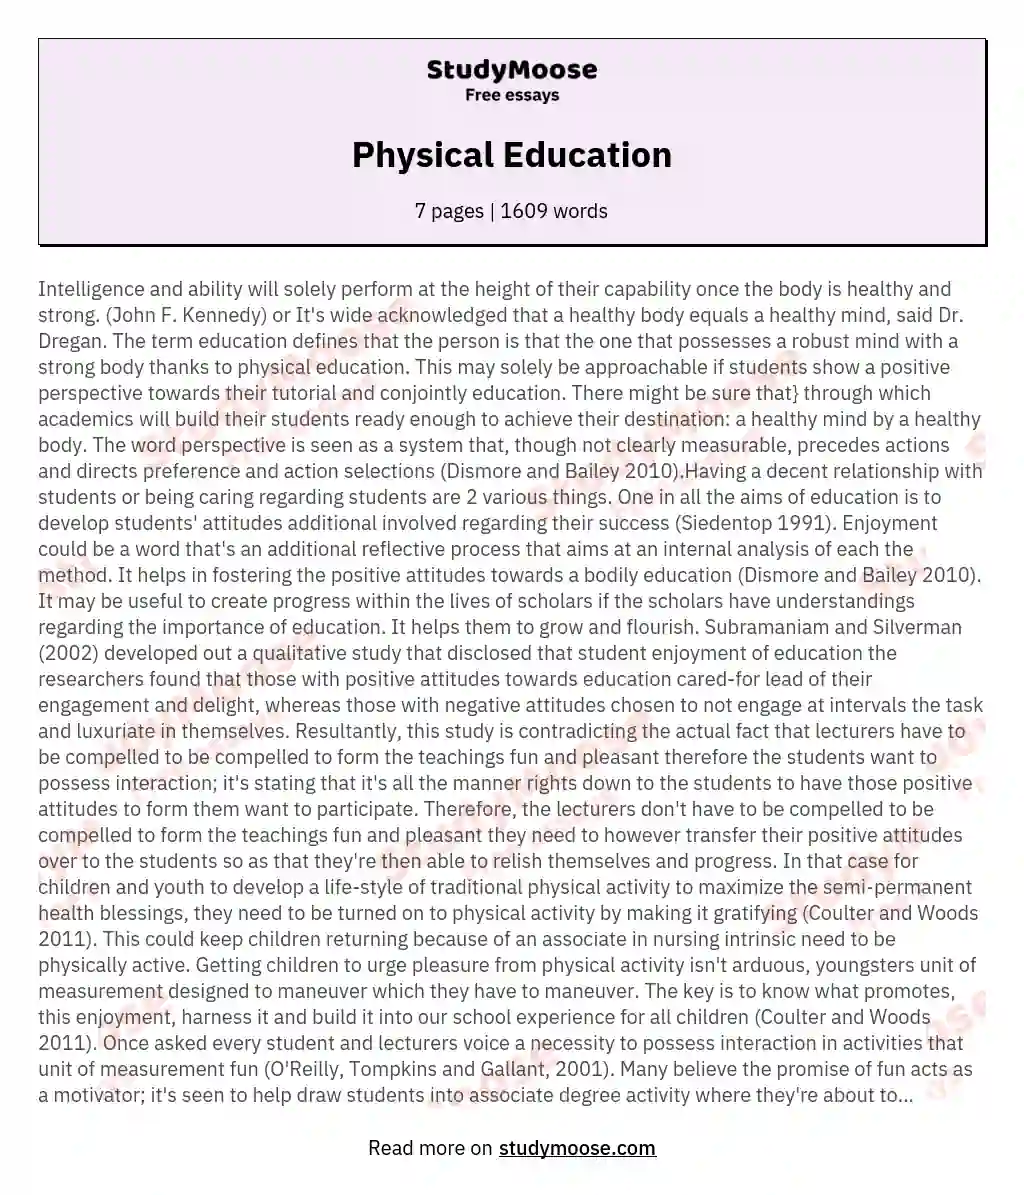 Physical Education essay